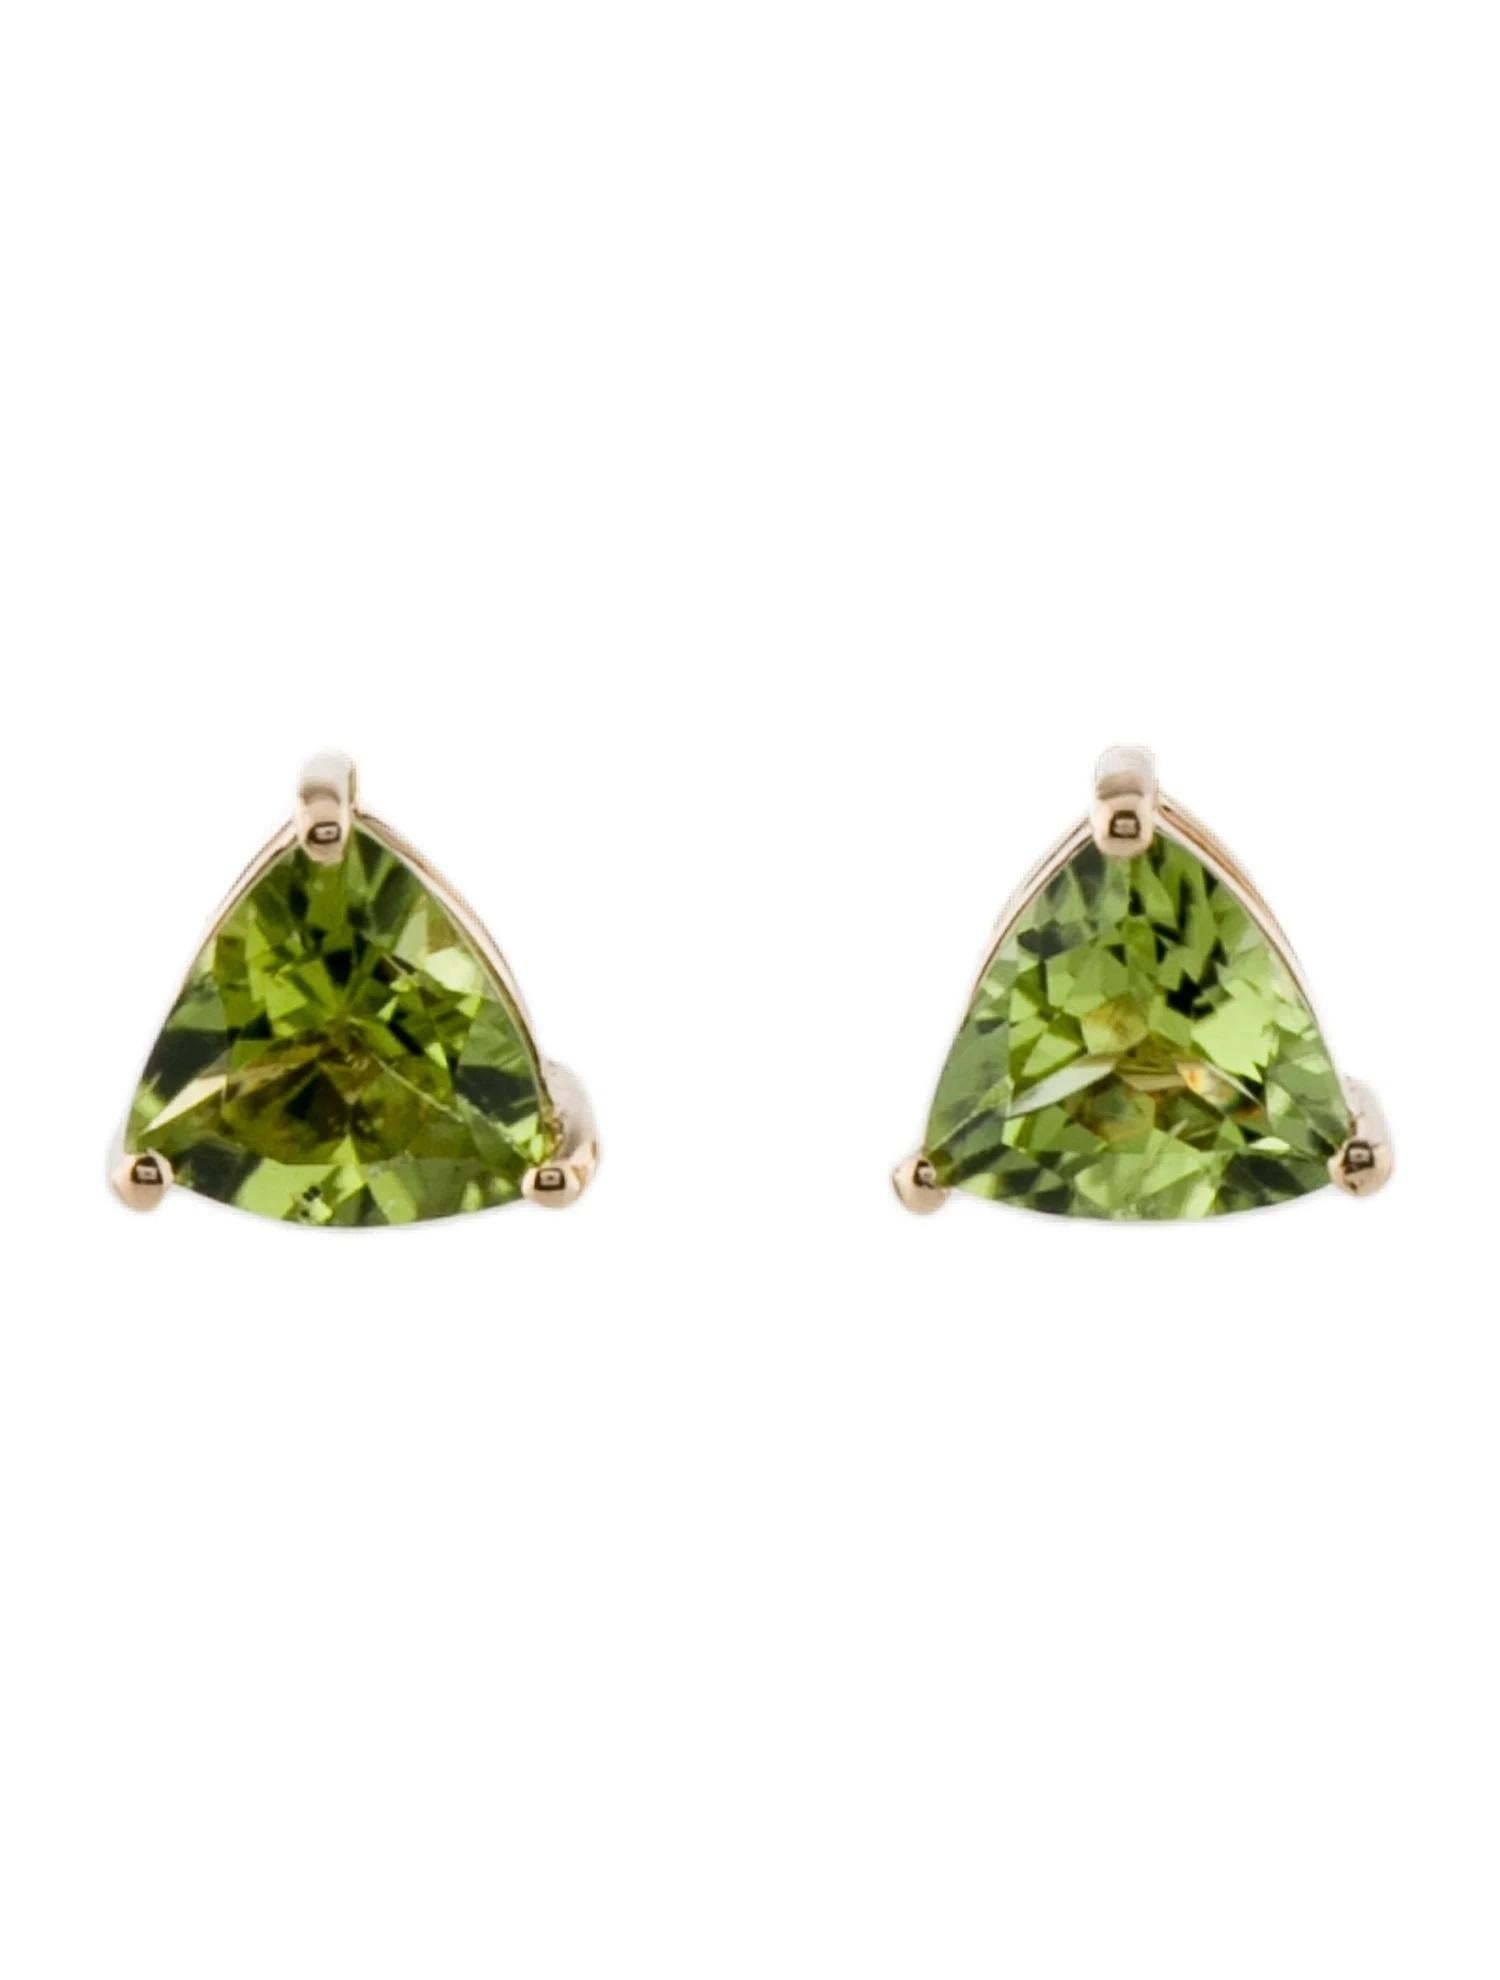 Brilliant Cut 14K Peridot Stud Earrings - Vibrant Green Gemstones, 2.15 Carats Total Weight For Sale